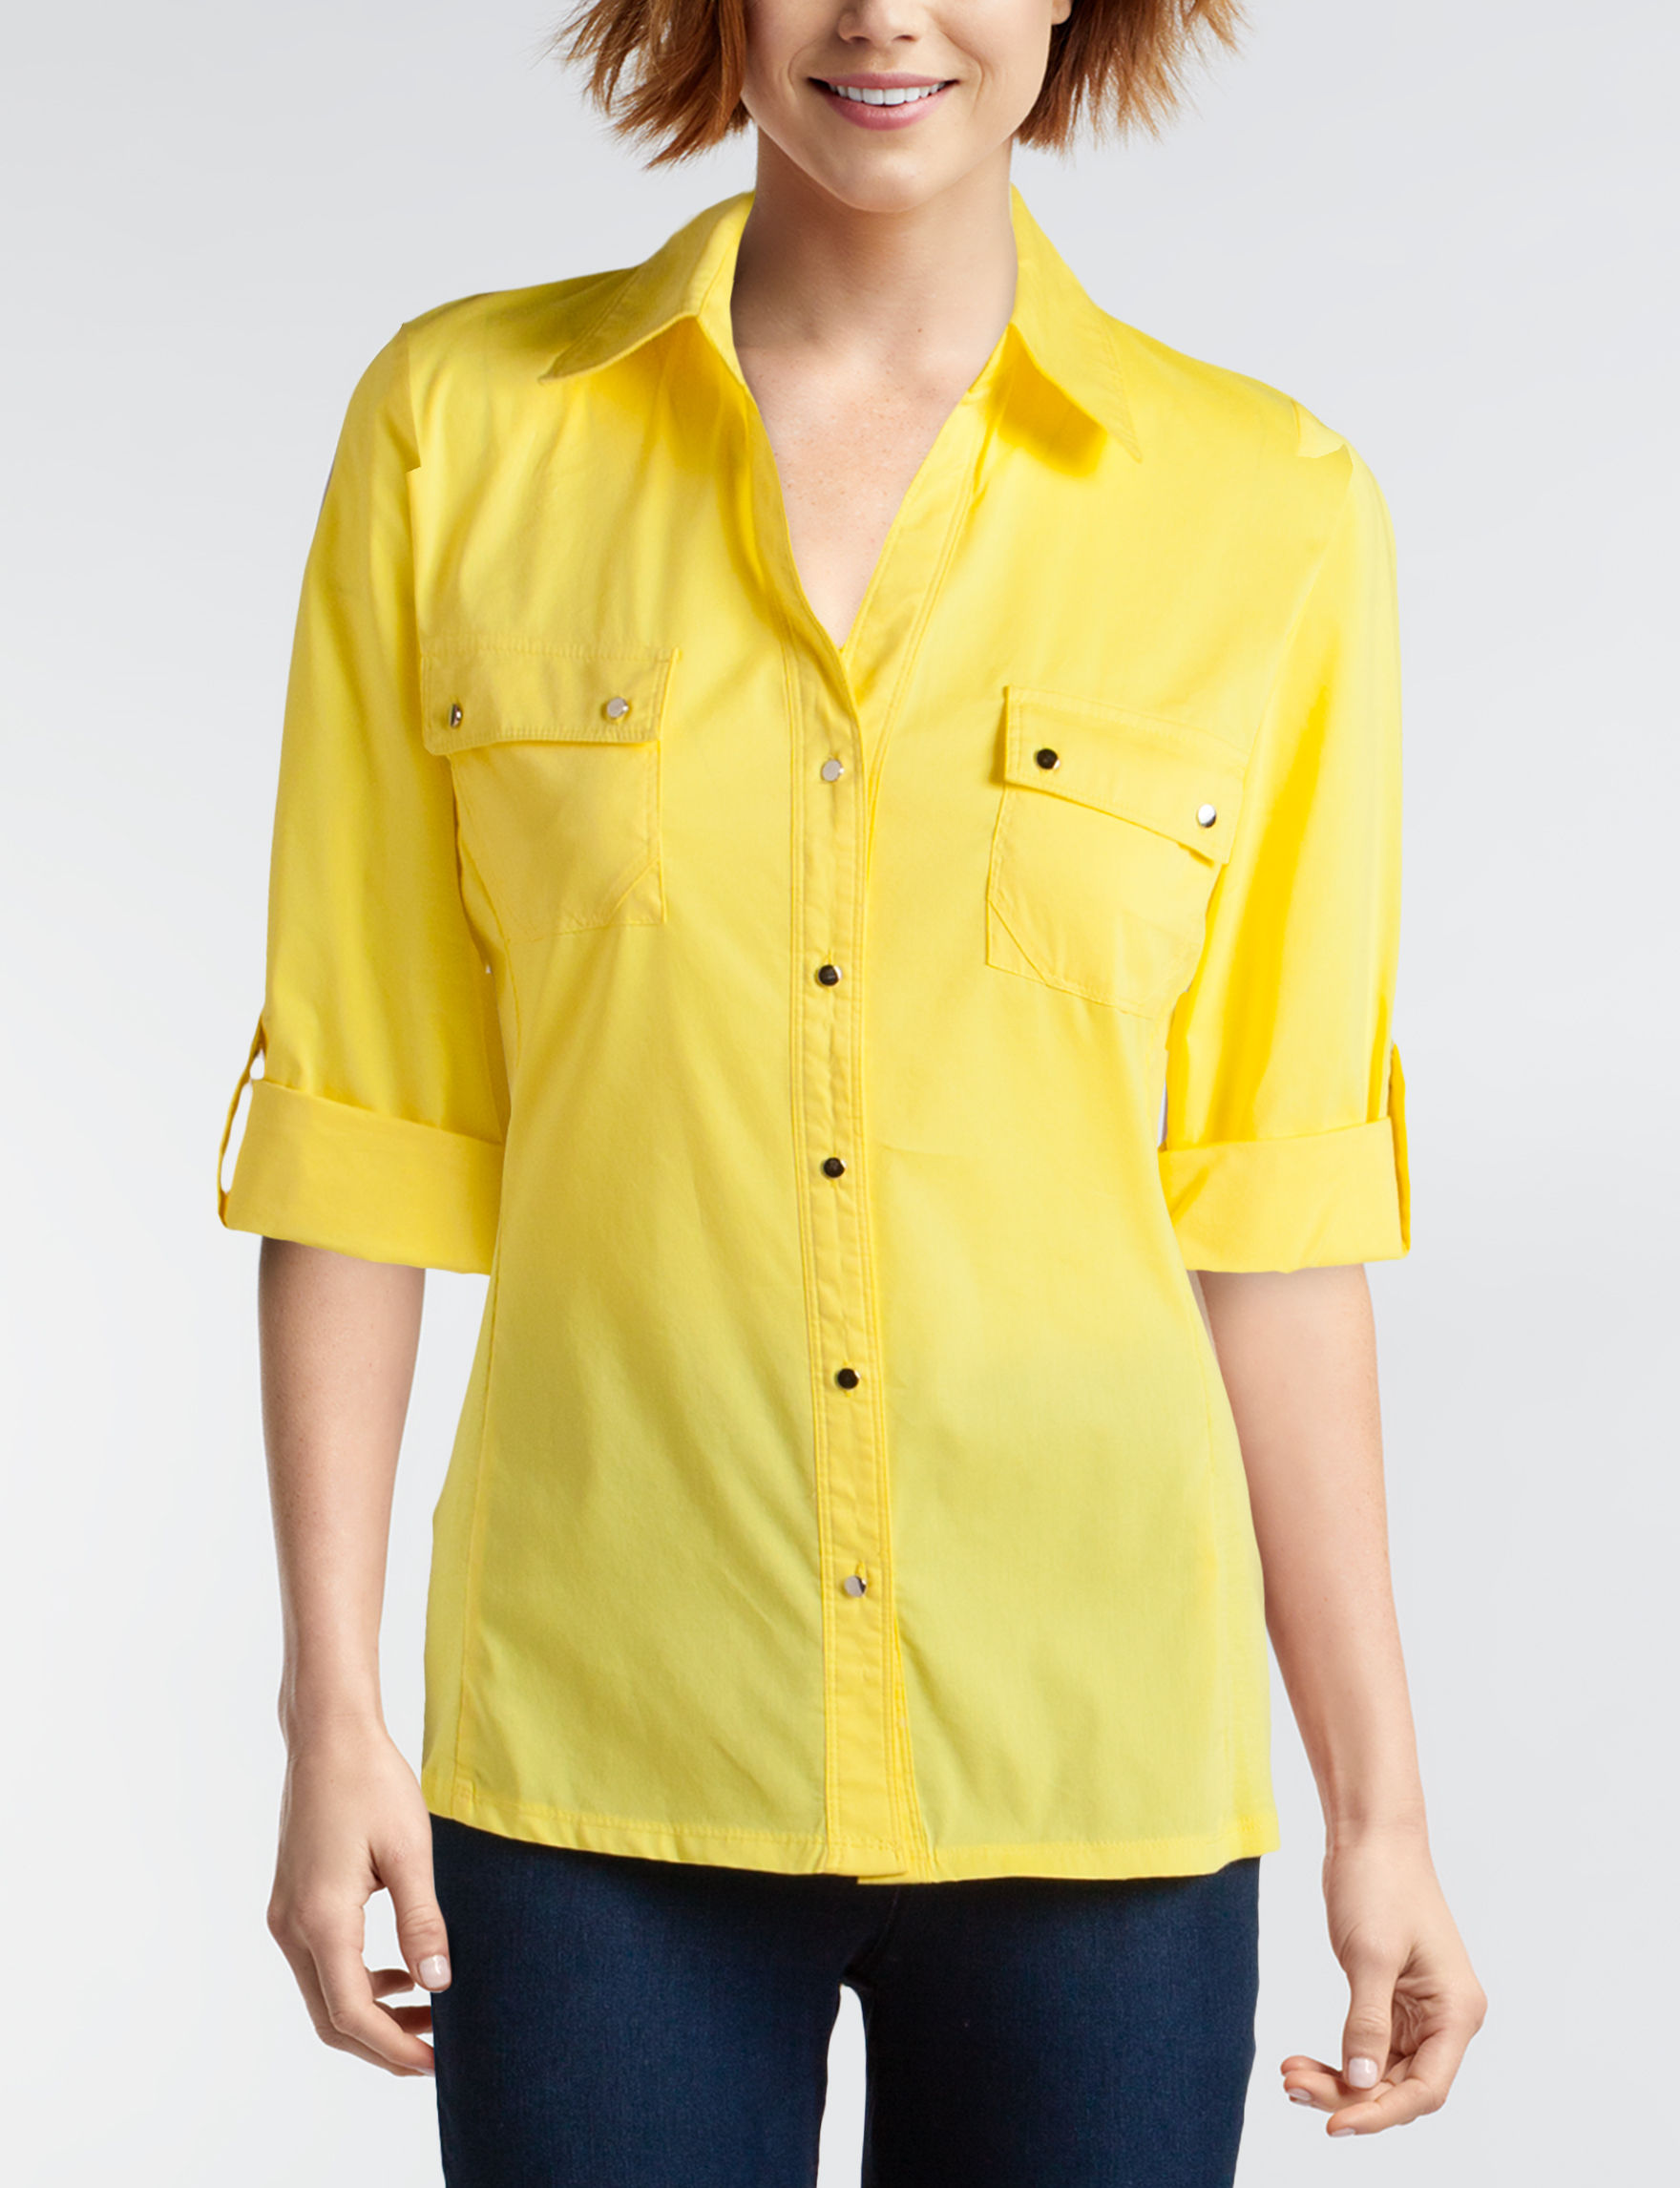 UPC 884148062850 product image for Zac & Rachel Women's Utility Buttoned Top - Bright Yellow - S - Zac & Rachel | upcitemdb.com